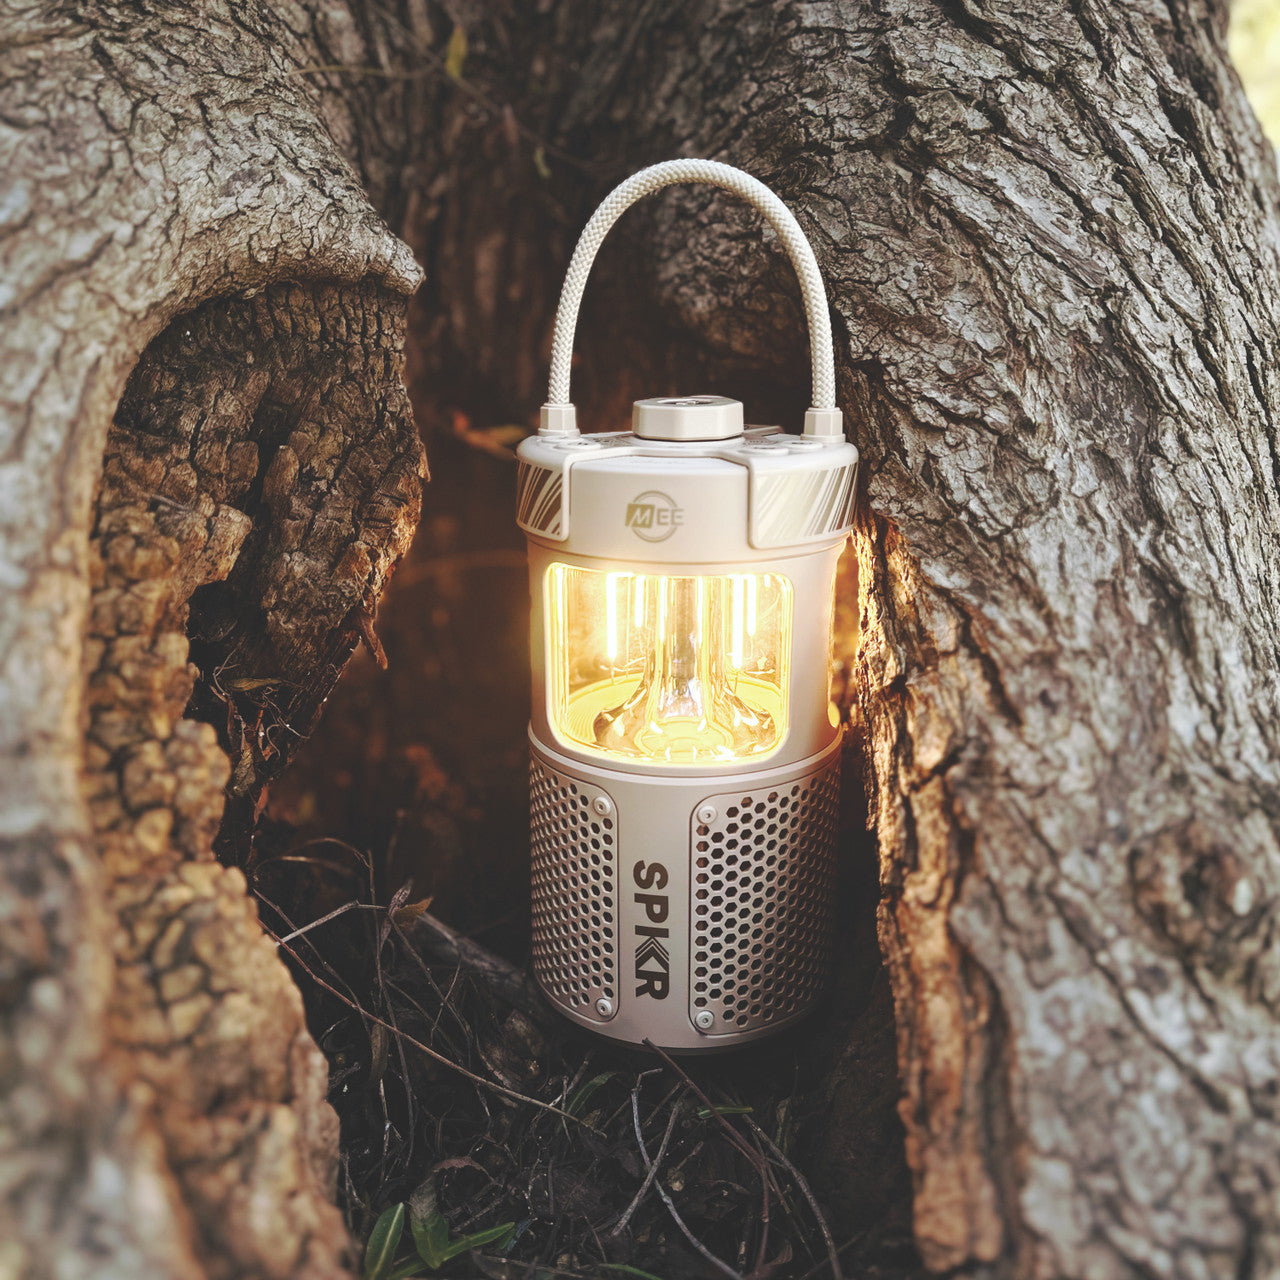 Image of lightSPKR Bluetooth Wireless Speaker with Camping Lantern.